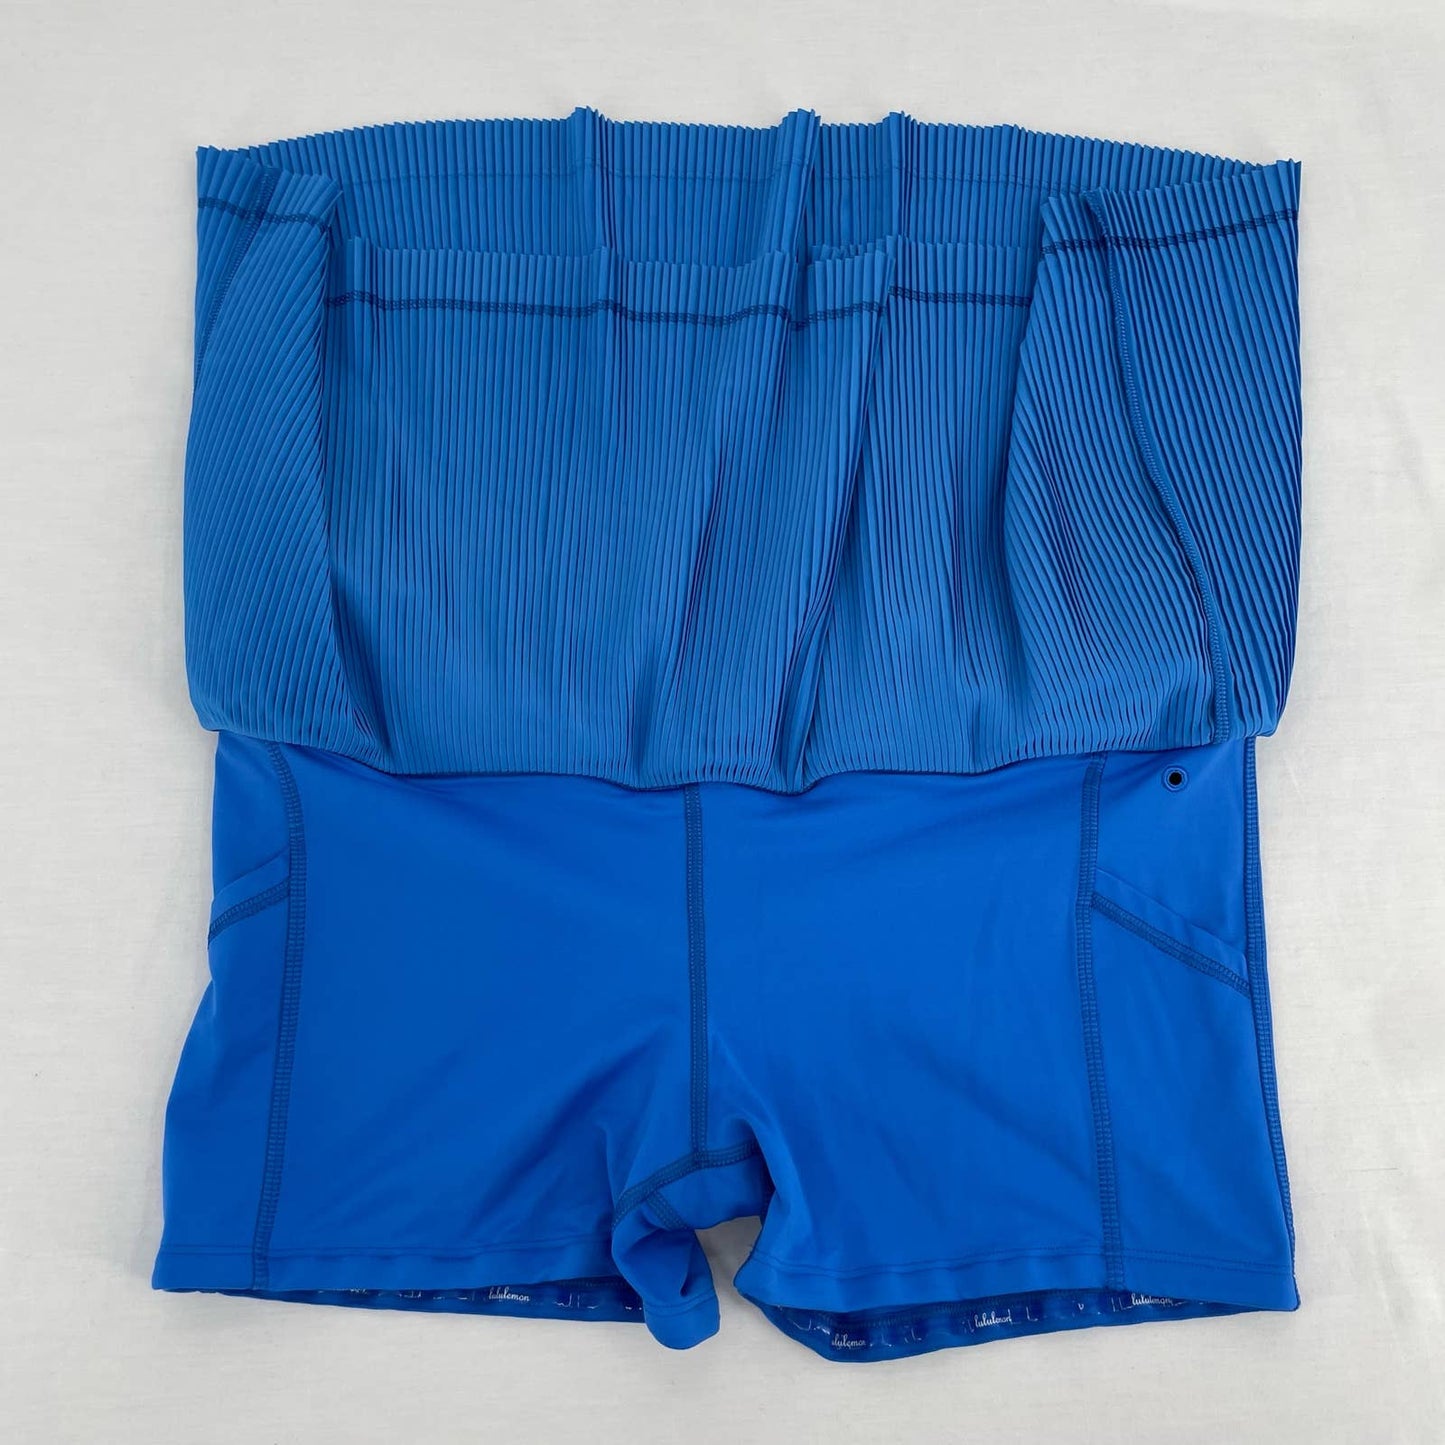 Lululemon Pleat to Street III Pipe Dream Bright Blue Tennis Skirt Active Skort Size 8